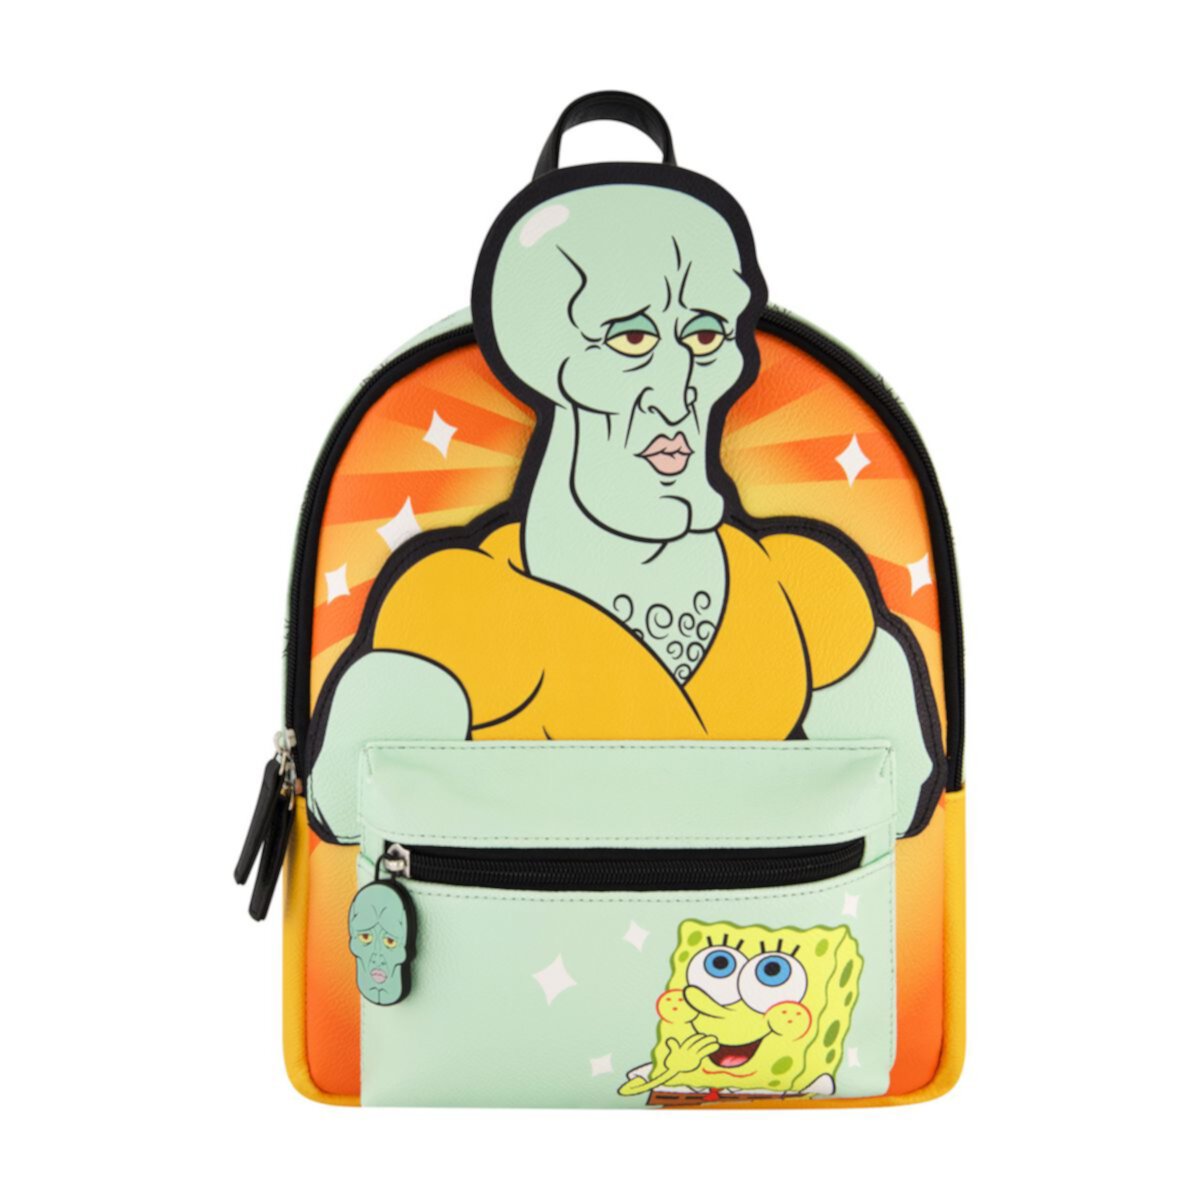 SpongeBob SquarePants and Handsome Squidward Mini Backpack Unbranded